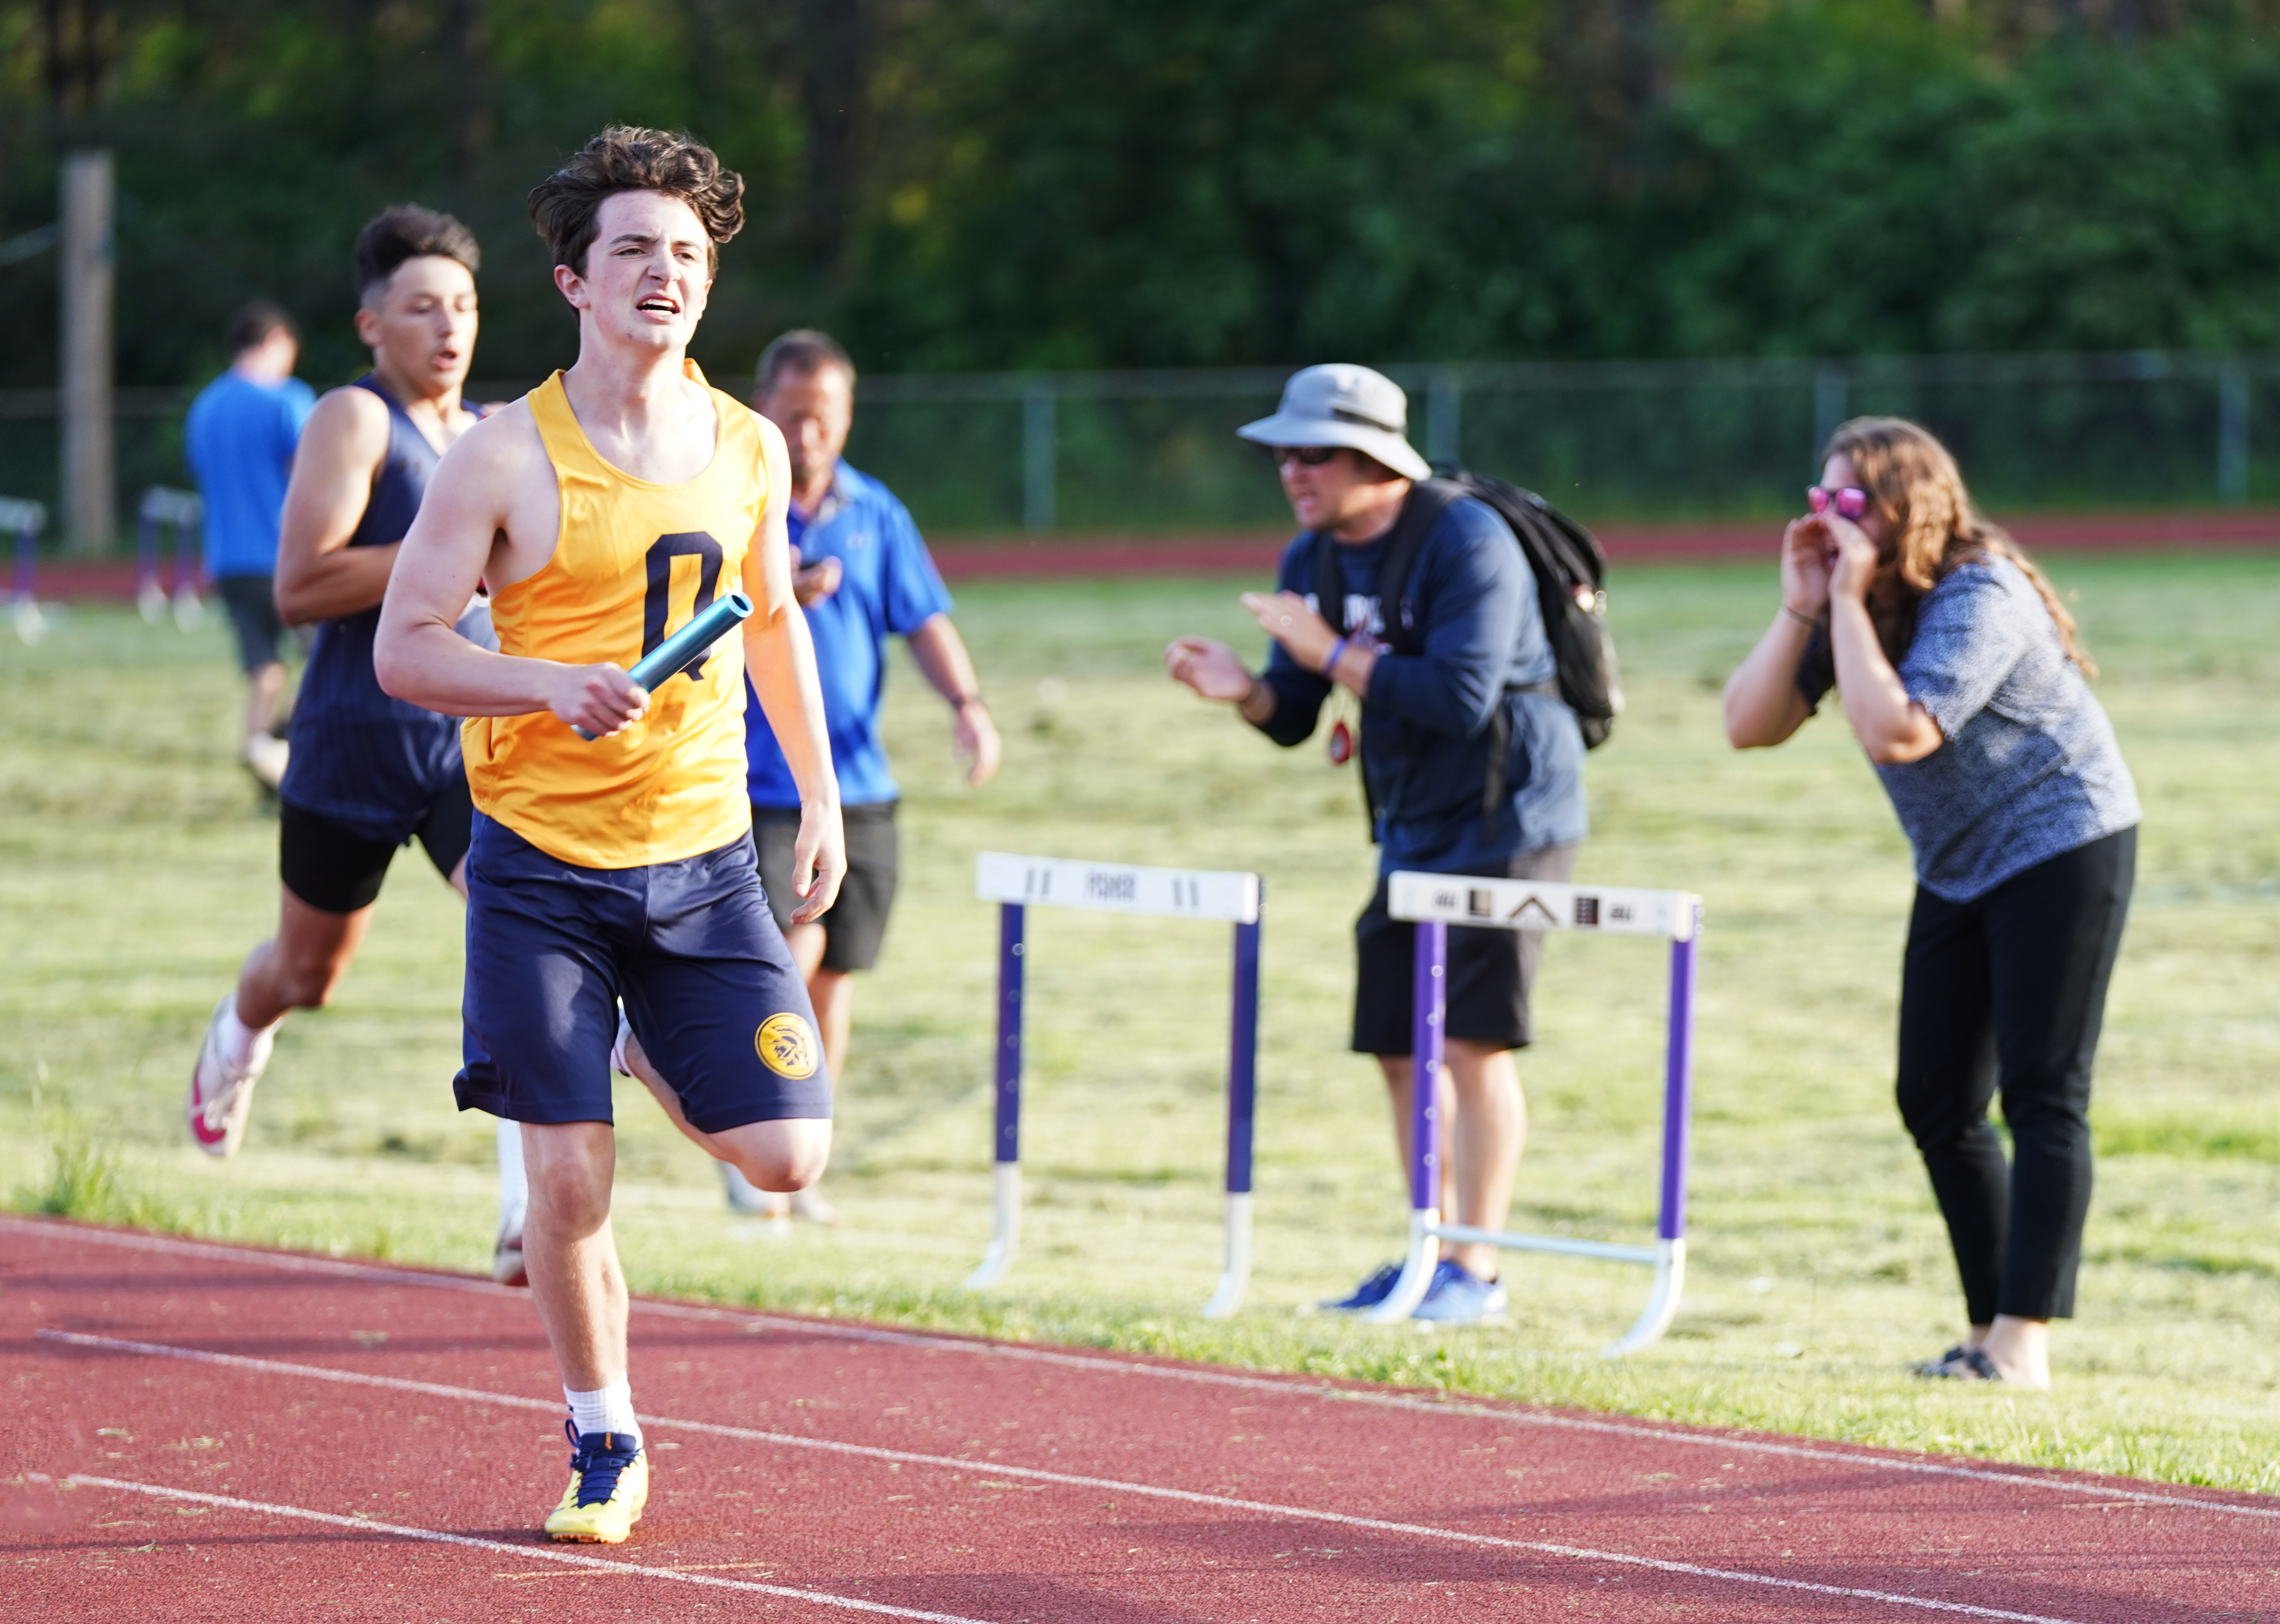 Teen runs in track race.